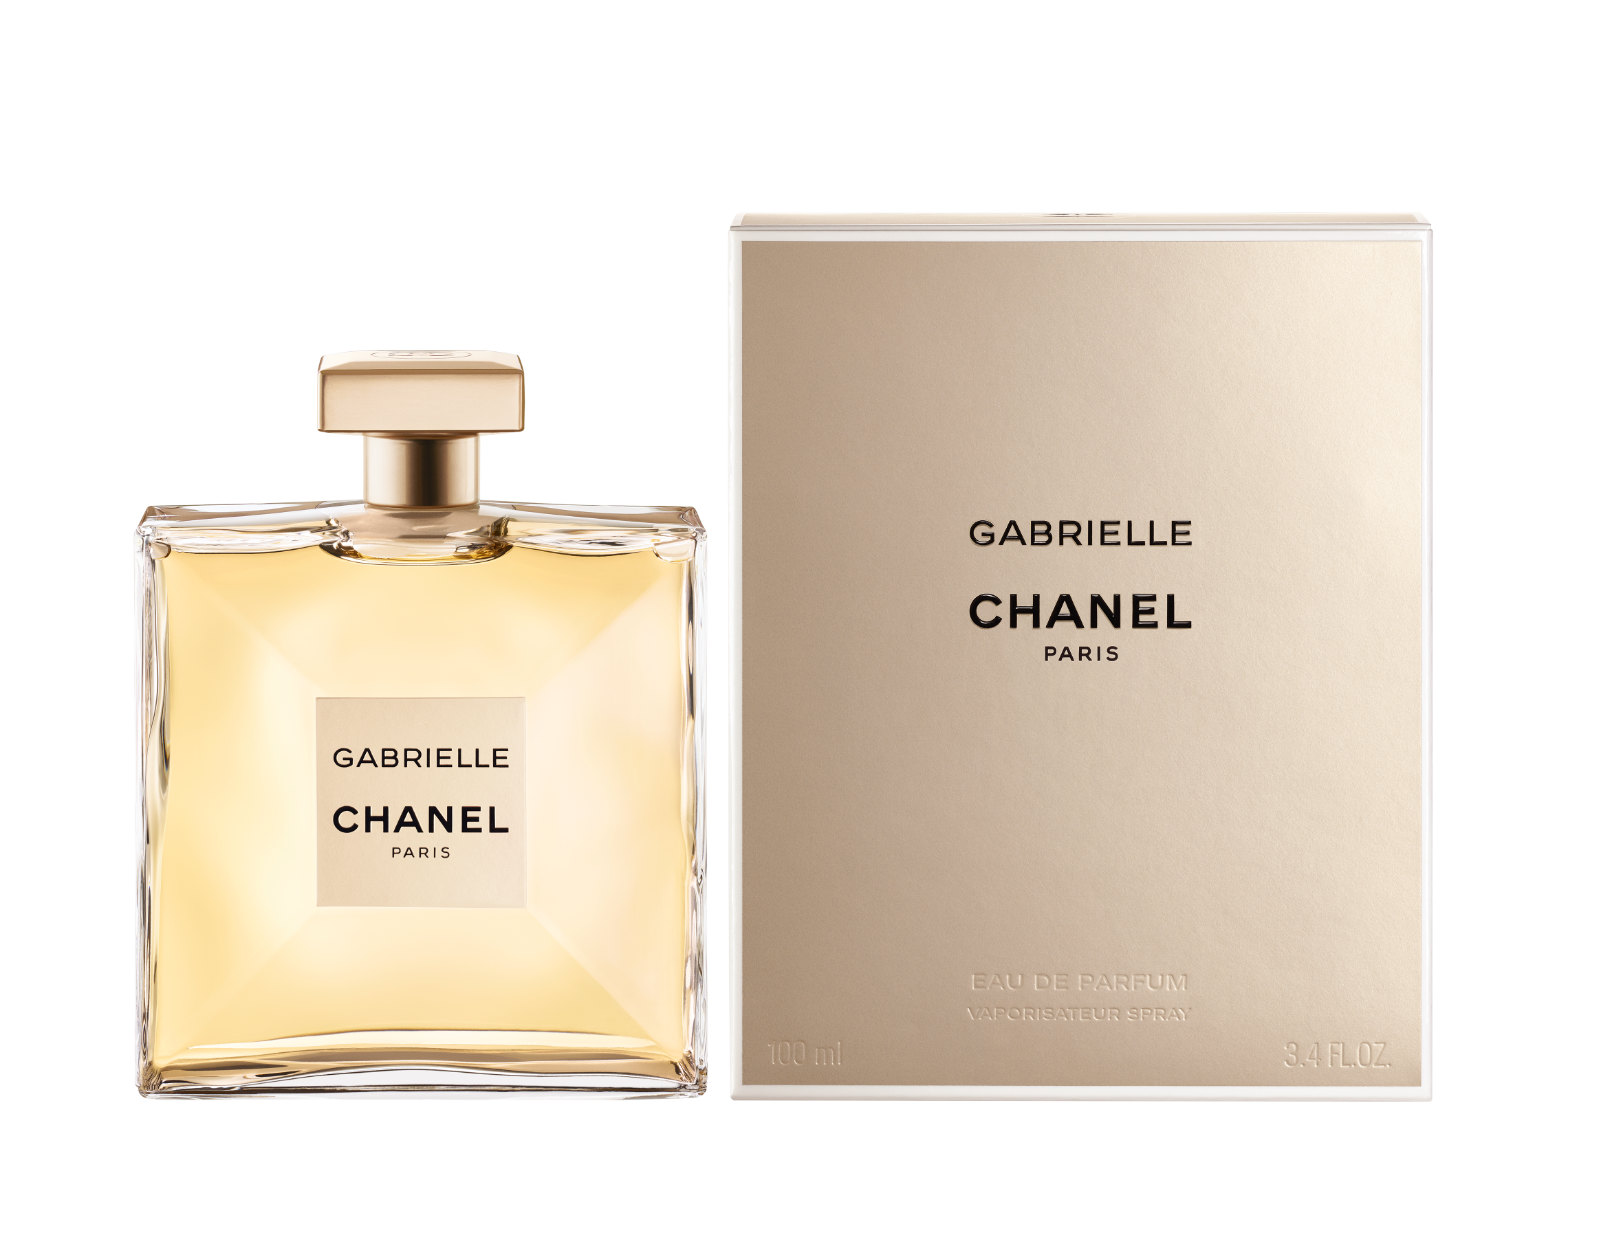 Gabrielle Chanel fragrance introduced; Kristen Stewart to model in ...